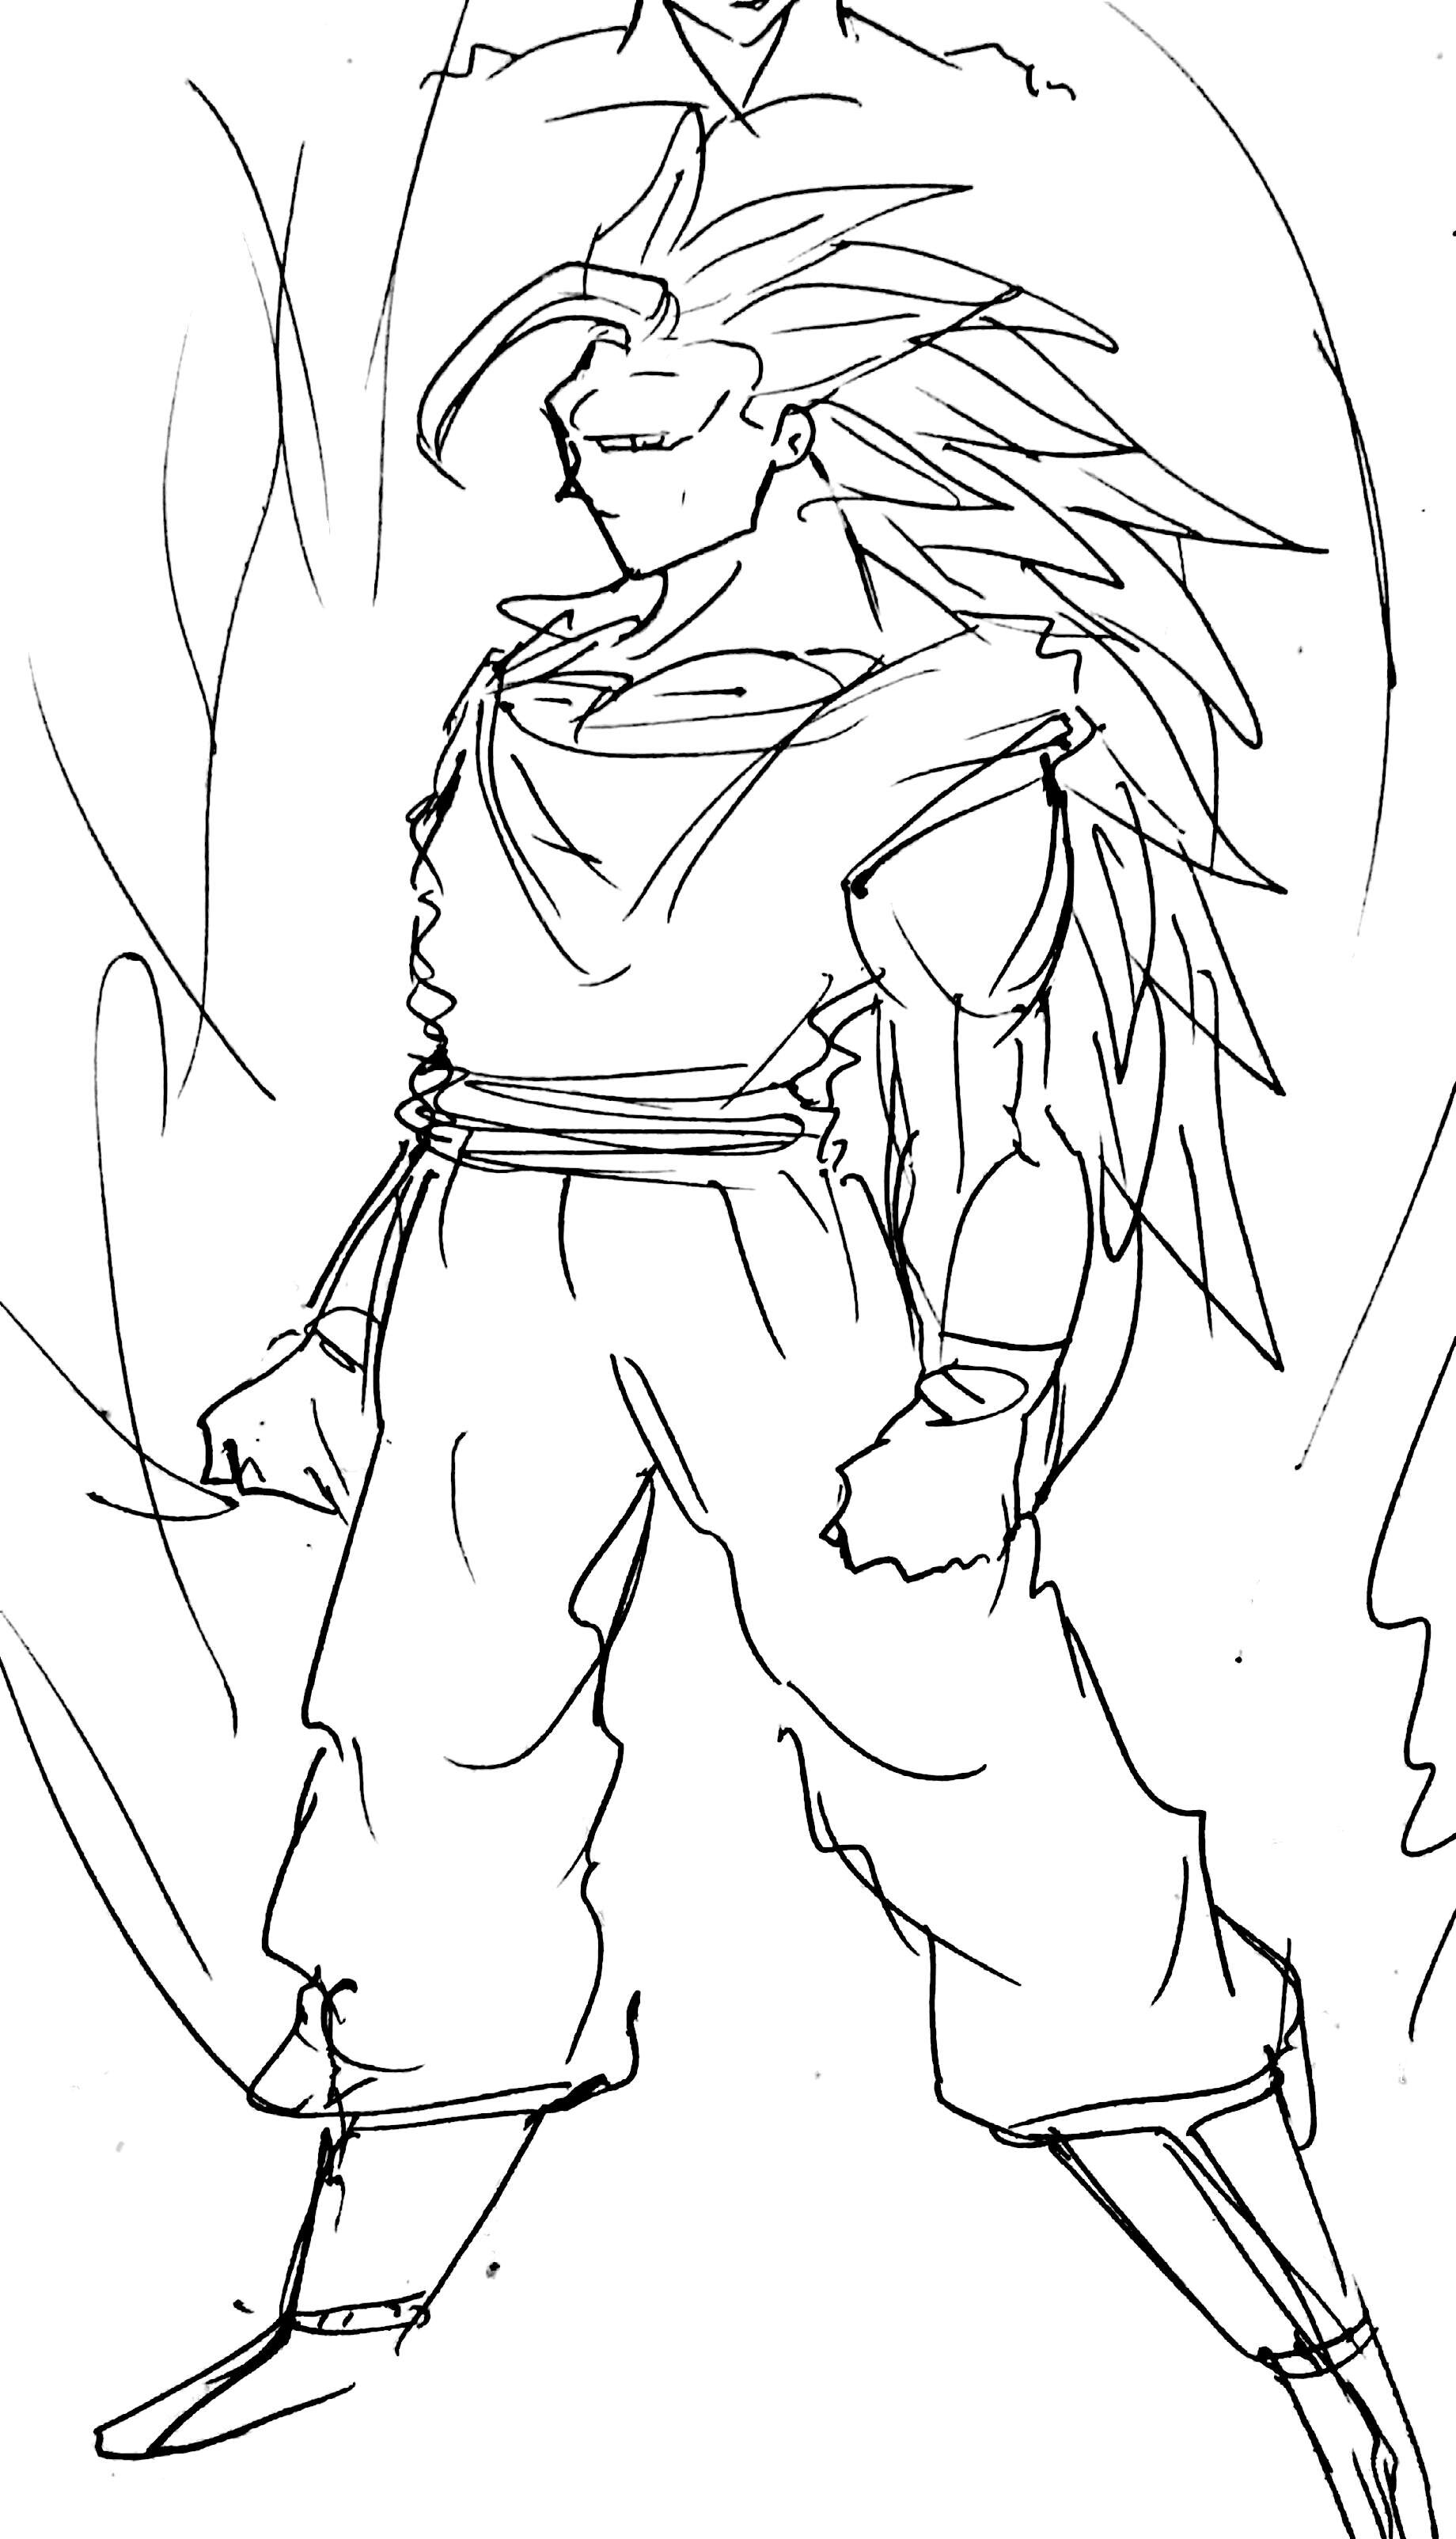 ArtStation - Goku Super Saiyan 3 (Old Sketch)